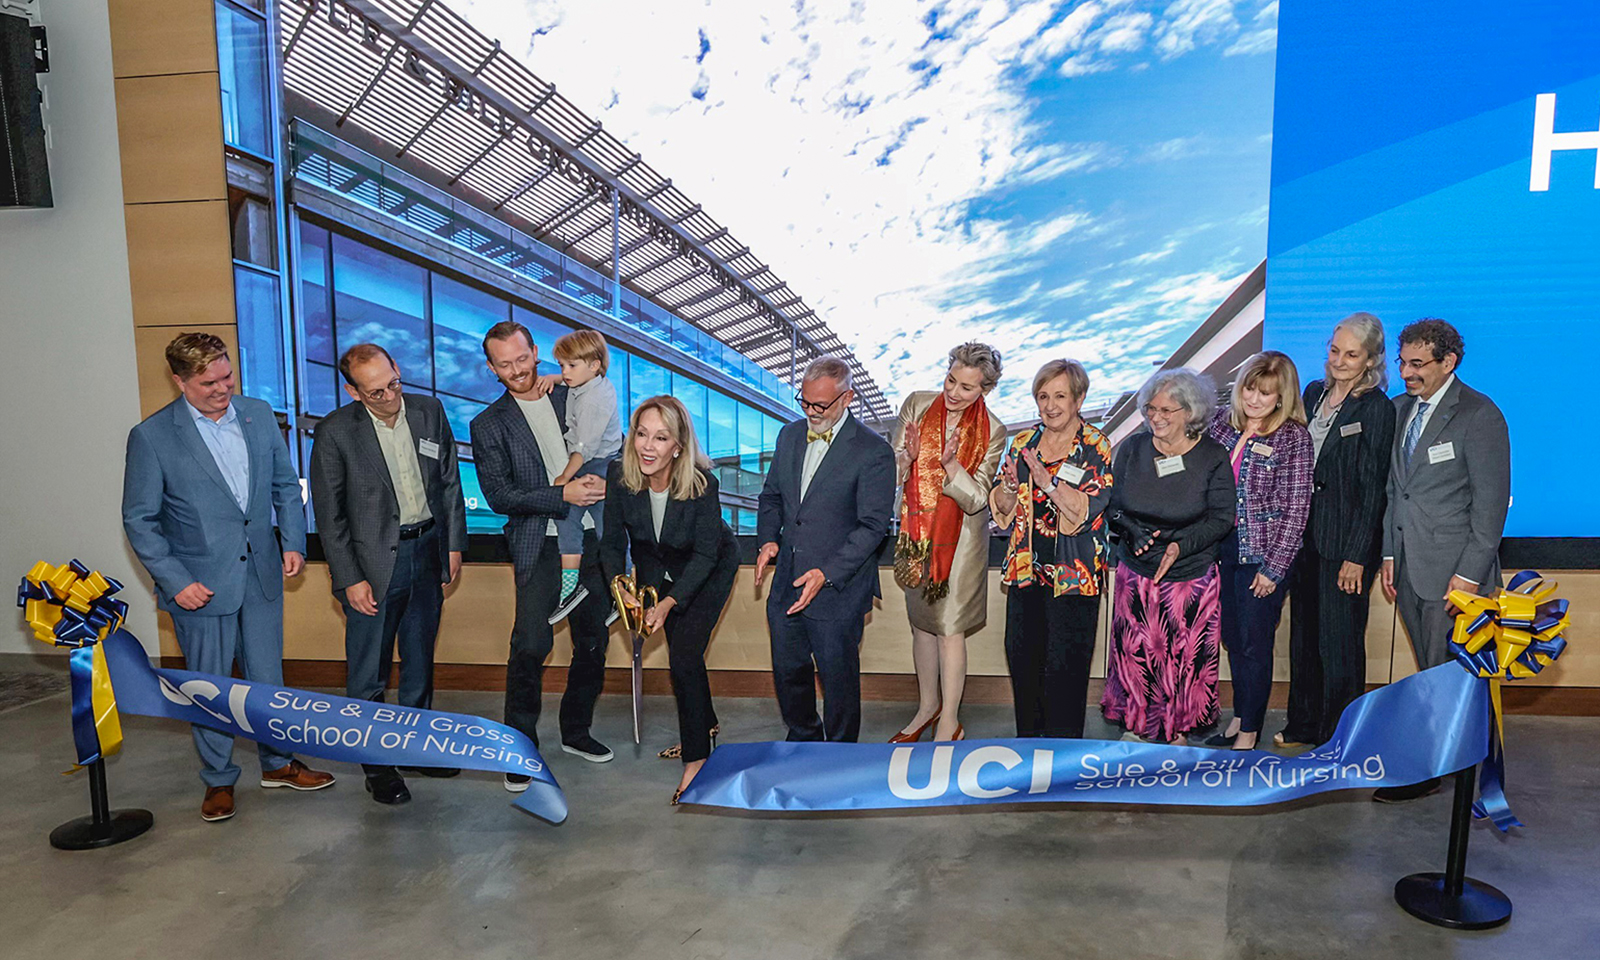 UCI nursing school celebrates new home